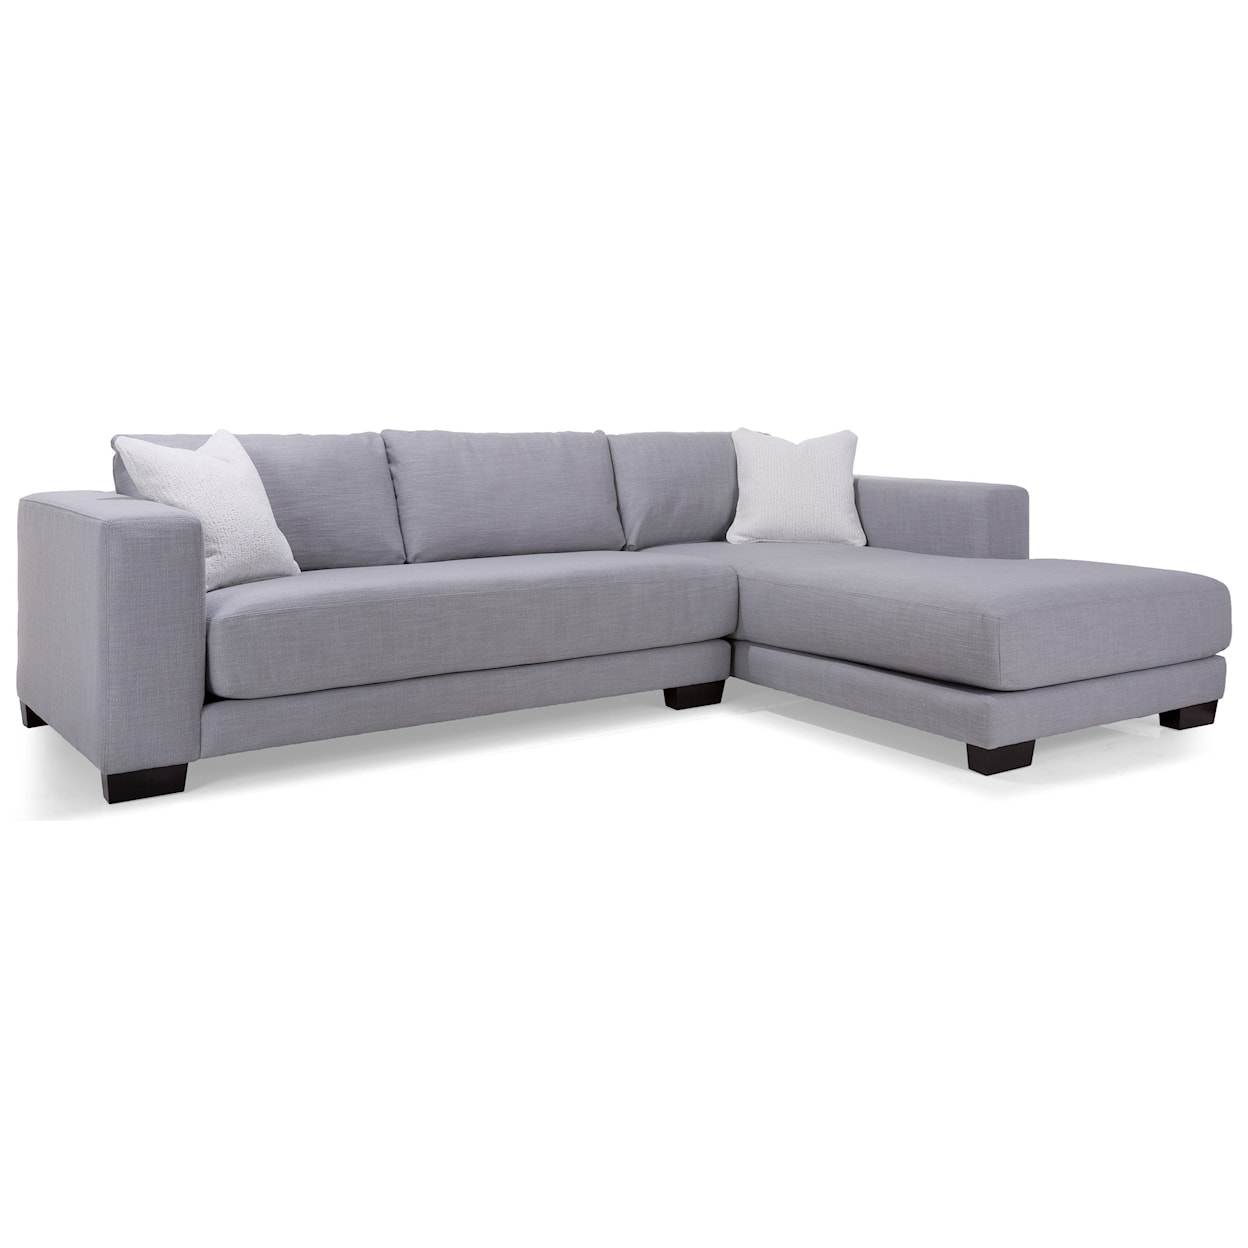 Decor-Rest 2802 Sectional Sofa